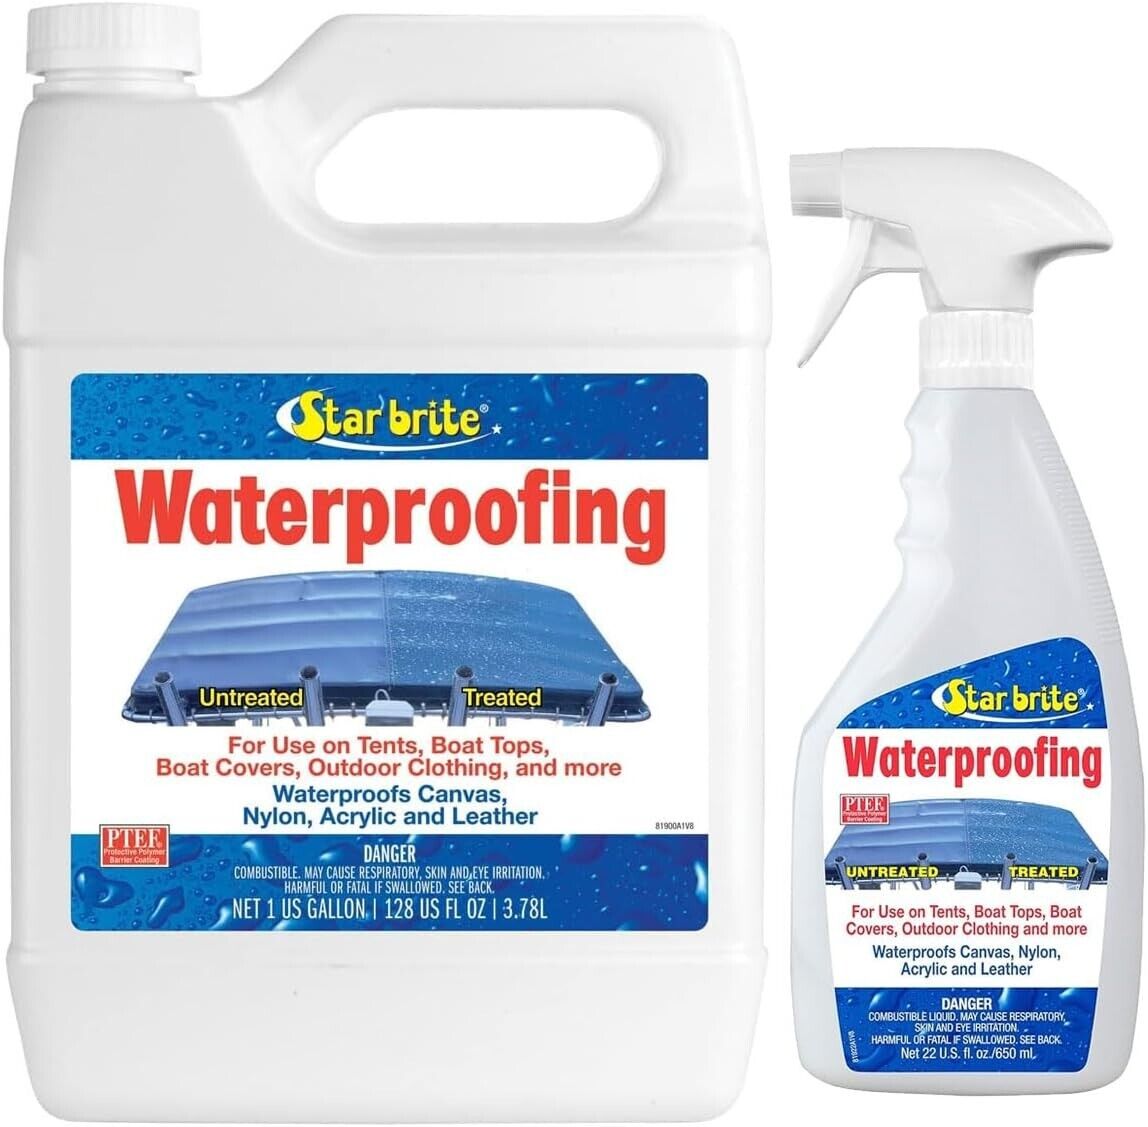 StarBrite Waterproofing 1 Gallon + Spray Bottle 22oz outdoor fabrics boat covers